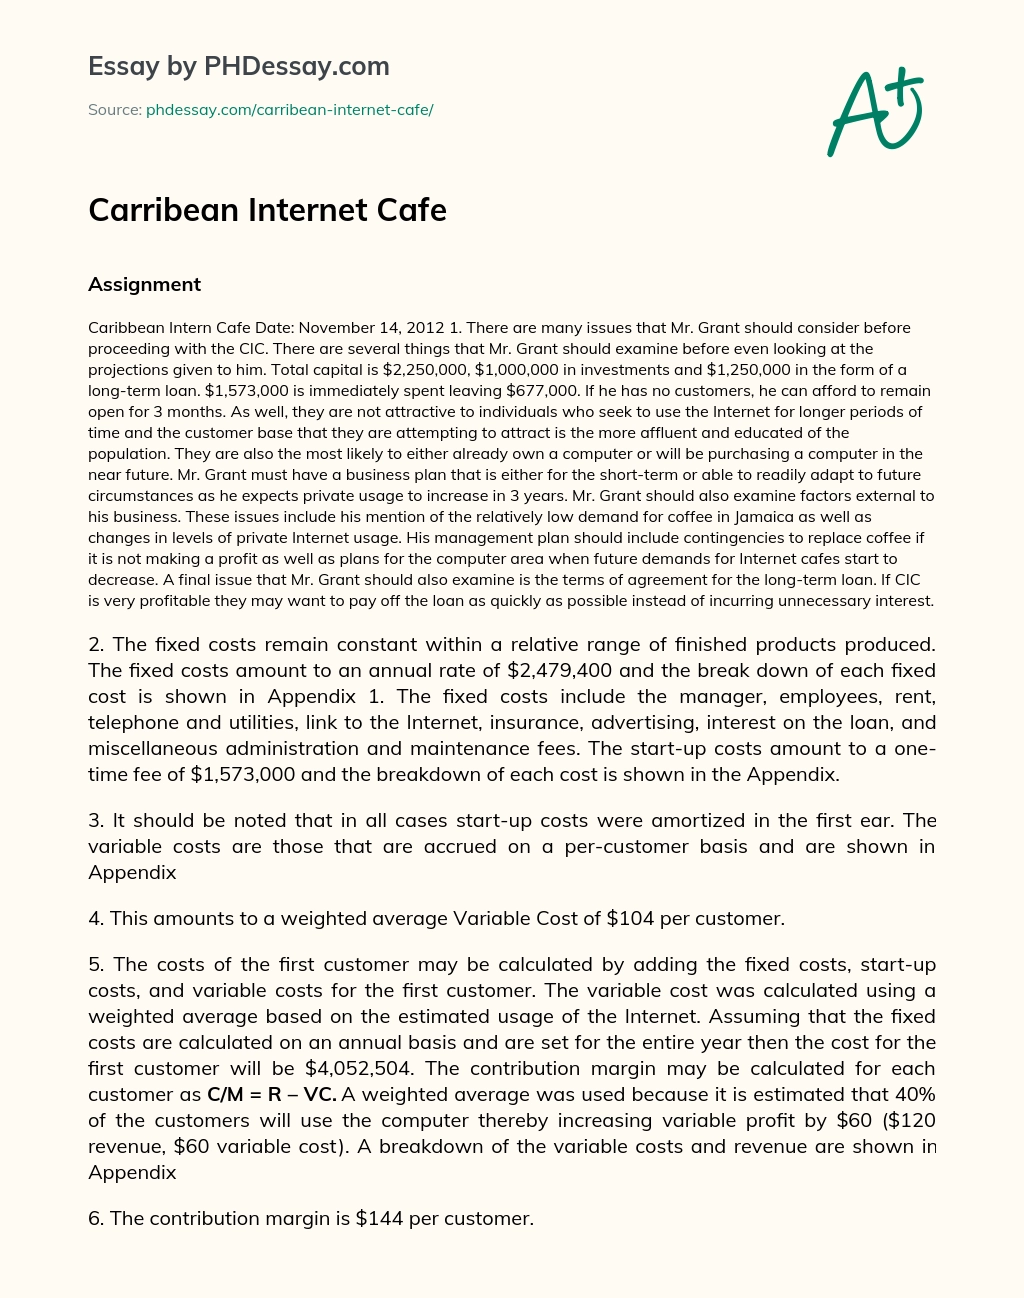 Carribean Internet Cafe essay